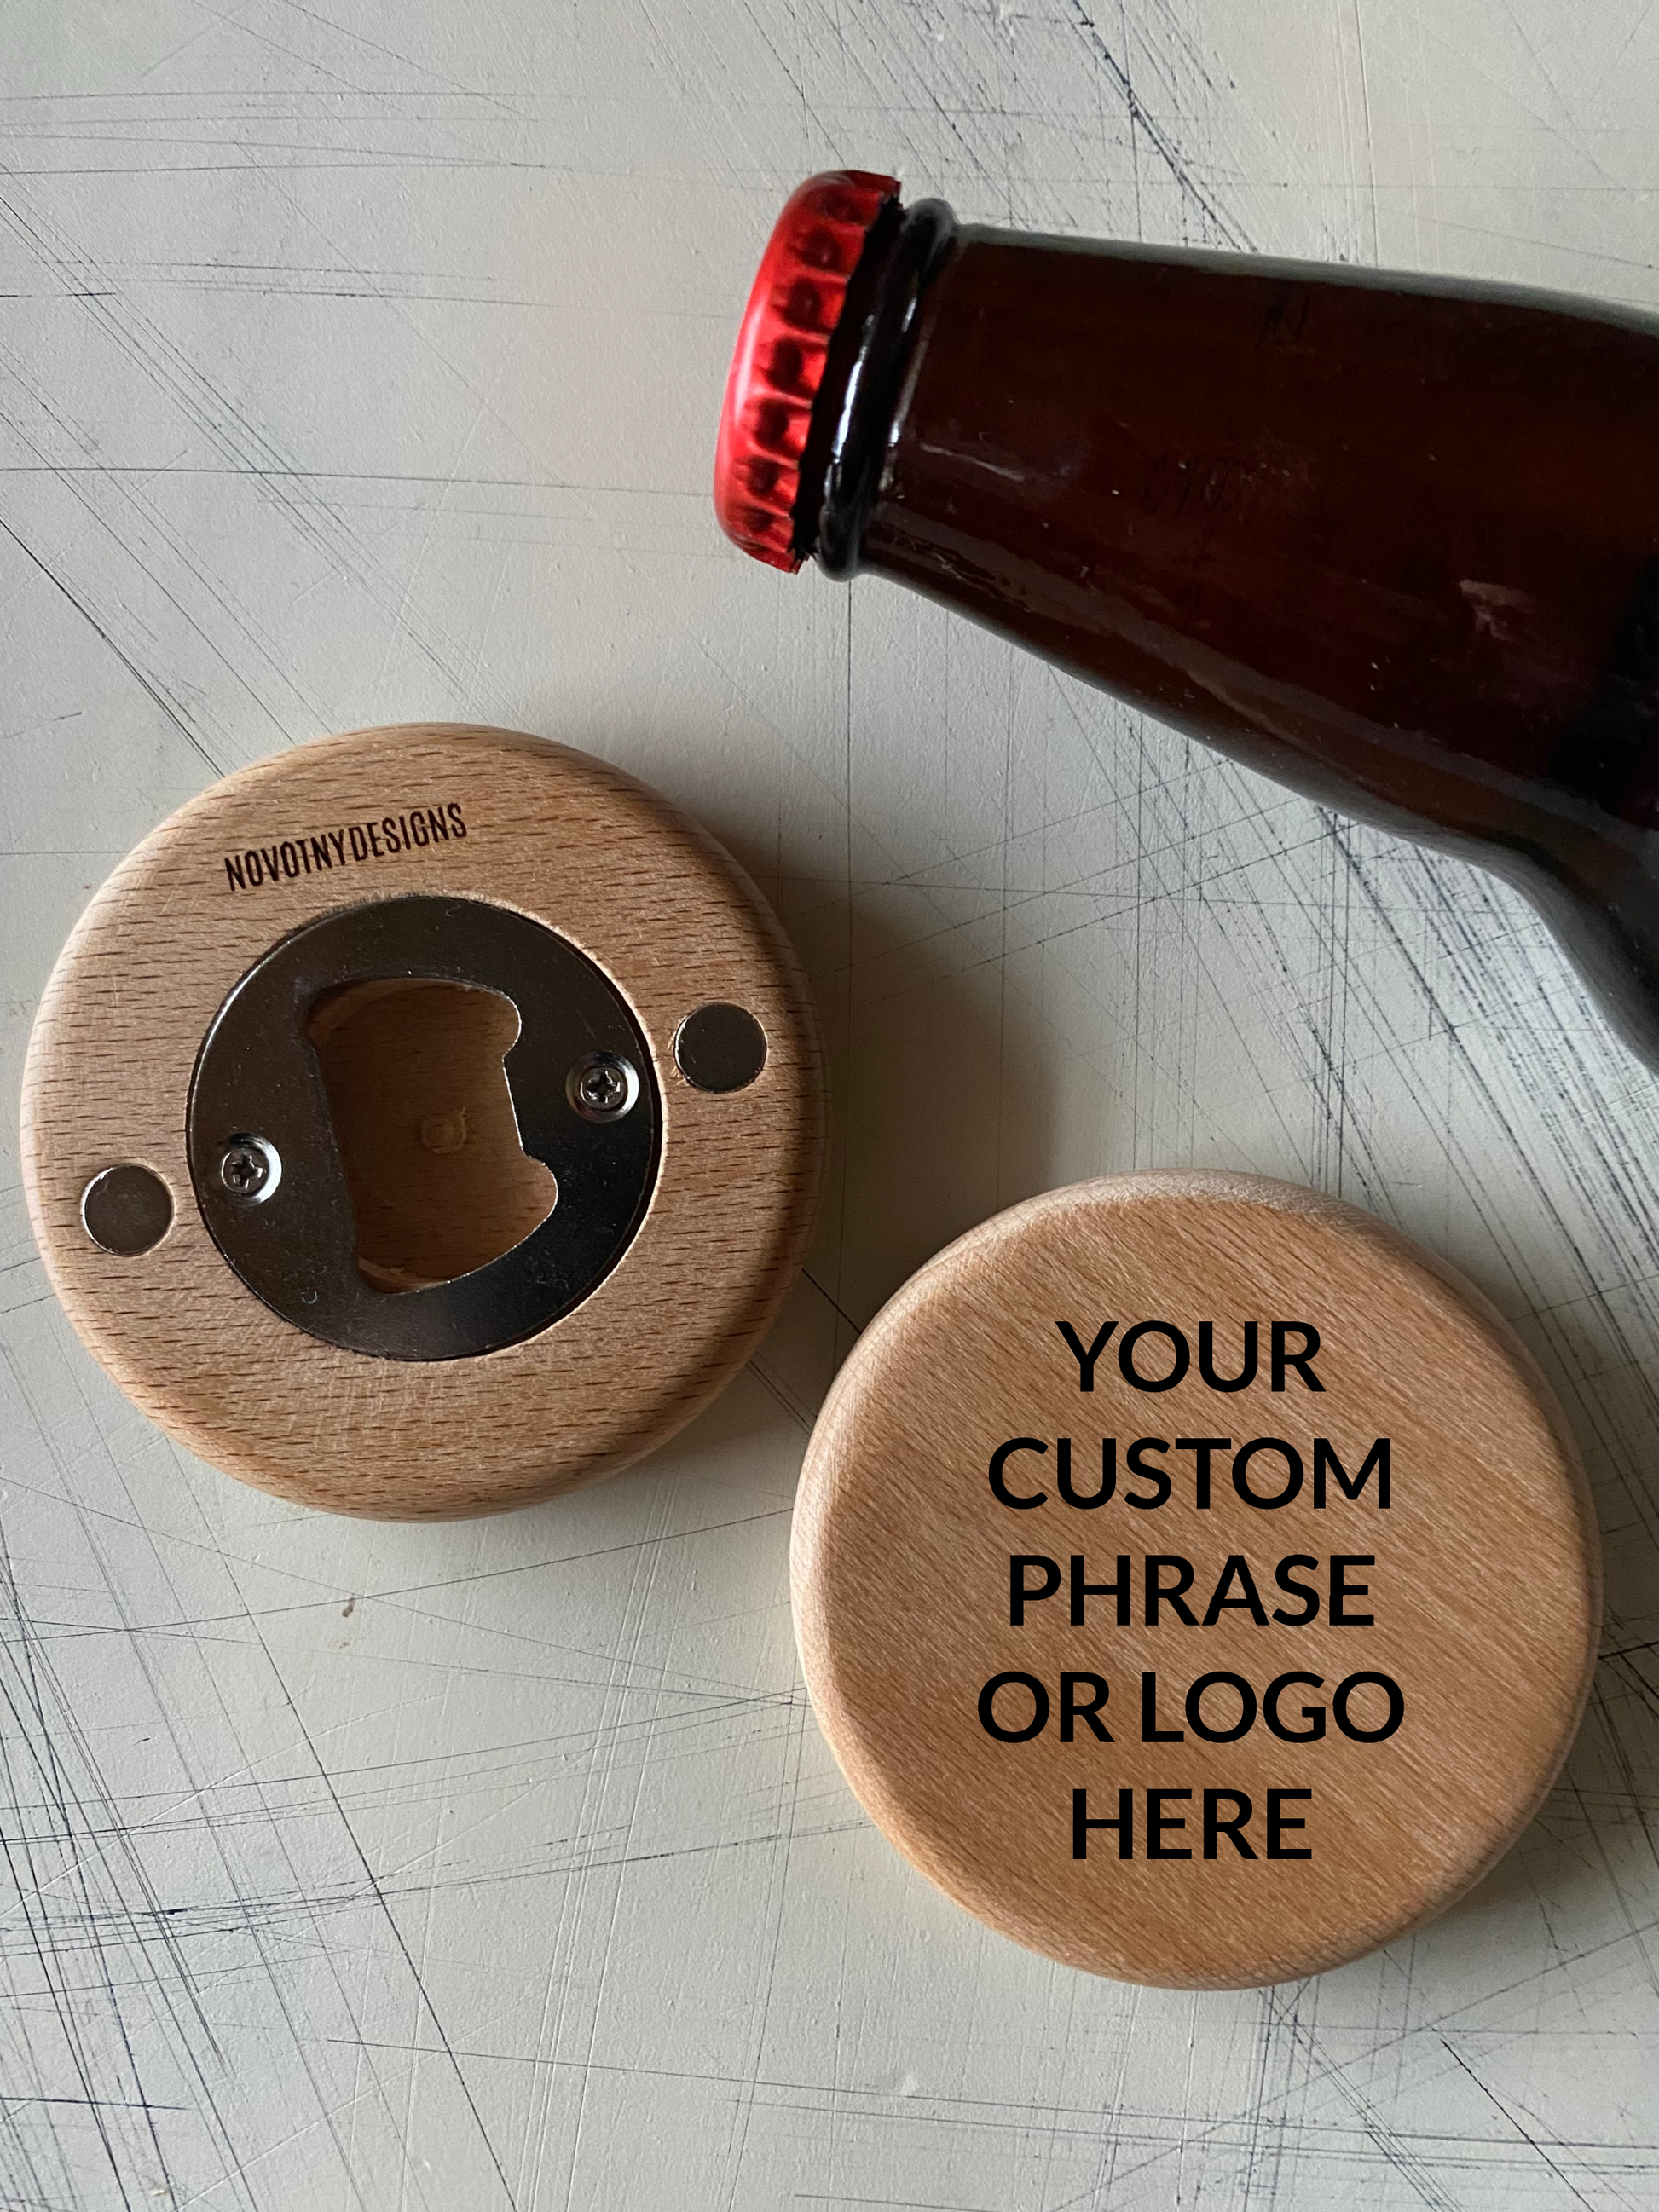 Customizable engraved wood bottle opener - Novotny Designs